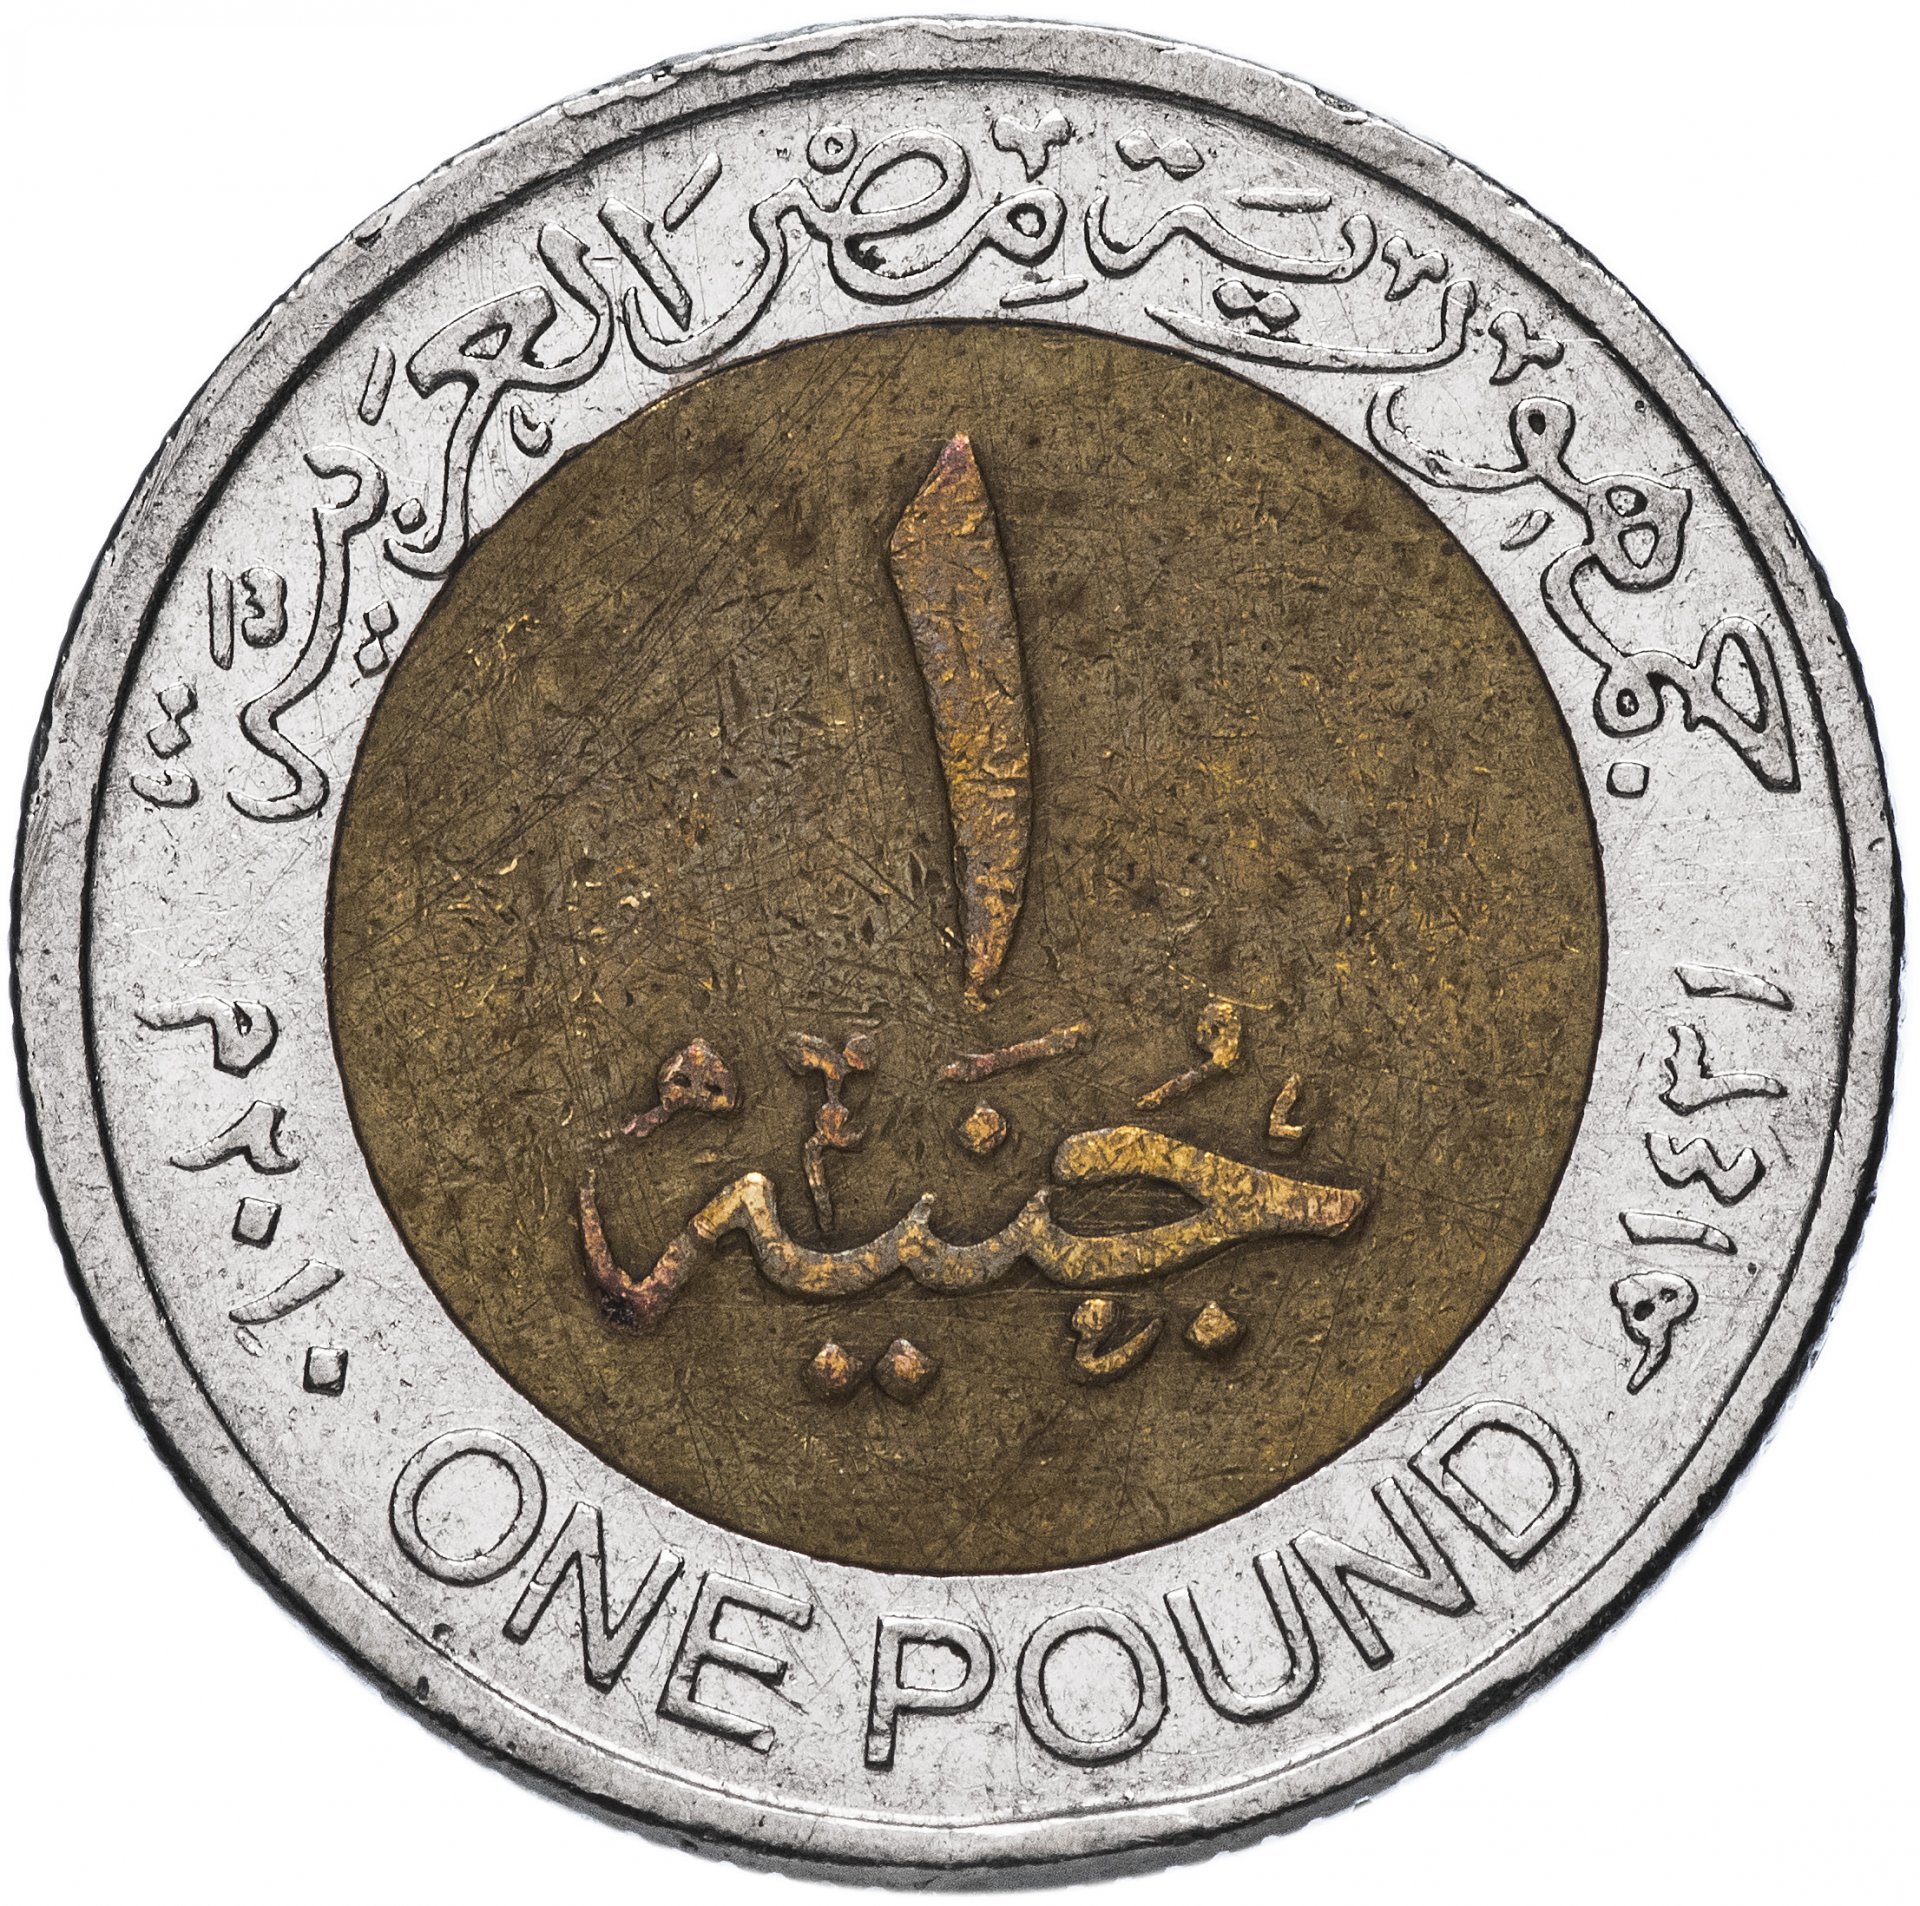 First coins. Монета Египта 1 паундс. One pound монета Египет. Монета Египет 1 фунт. Монета 1 pound Египет.